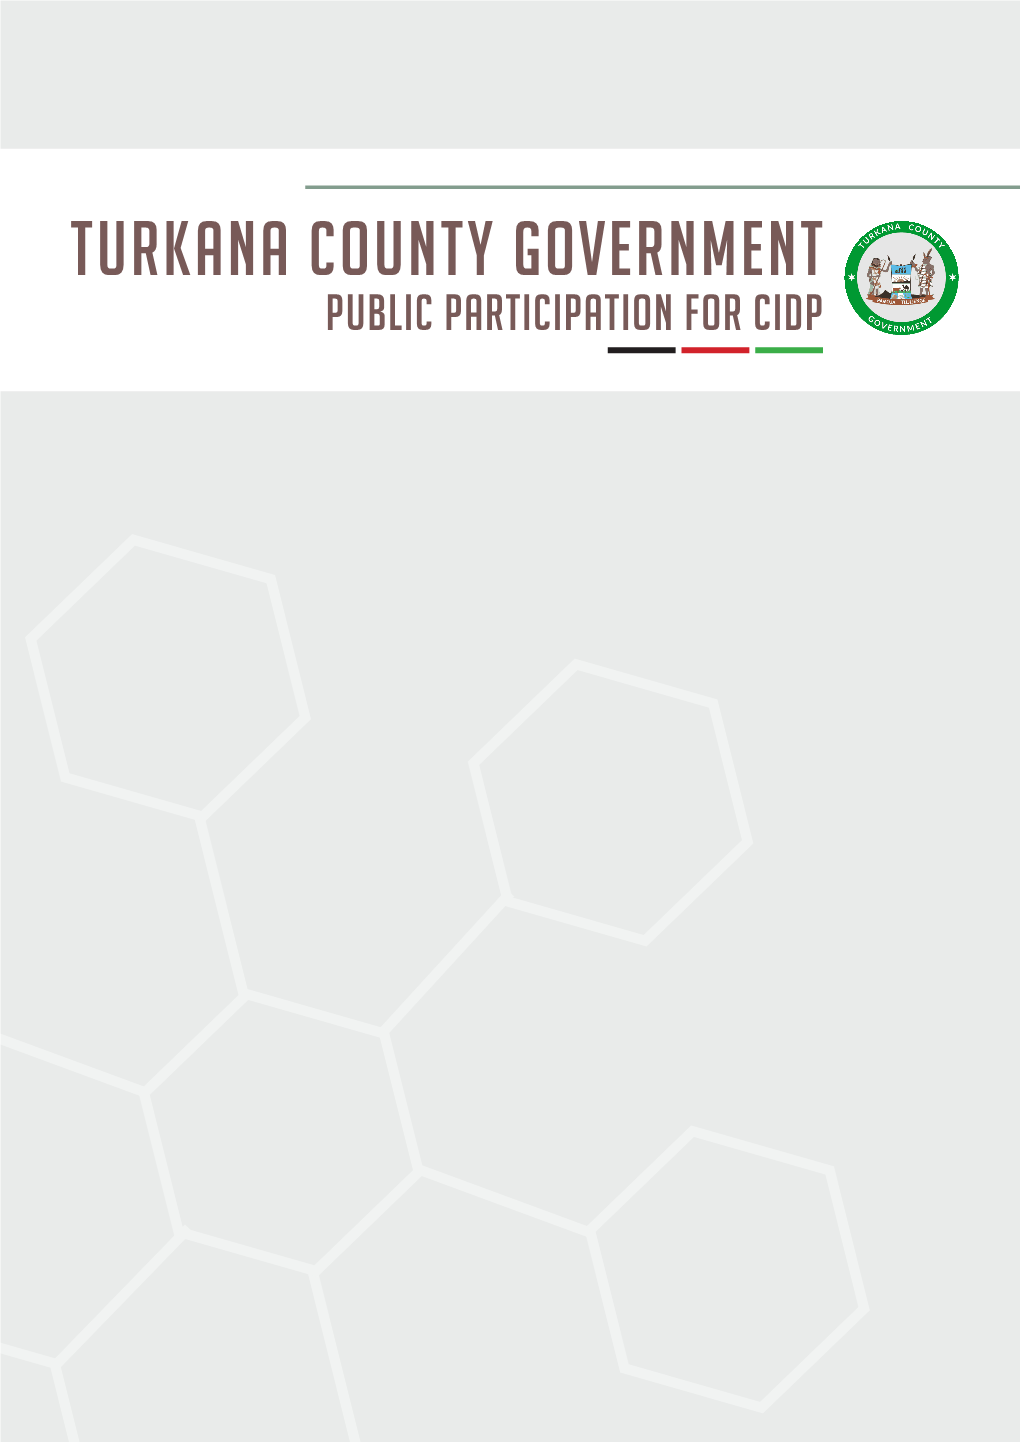 TURKANA COUNTY Government Public Participation for Cidp Public Participation for Reviewing and Redrafting the CIDP